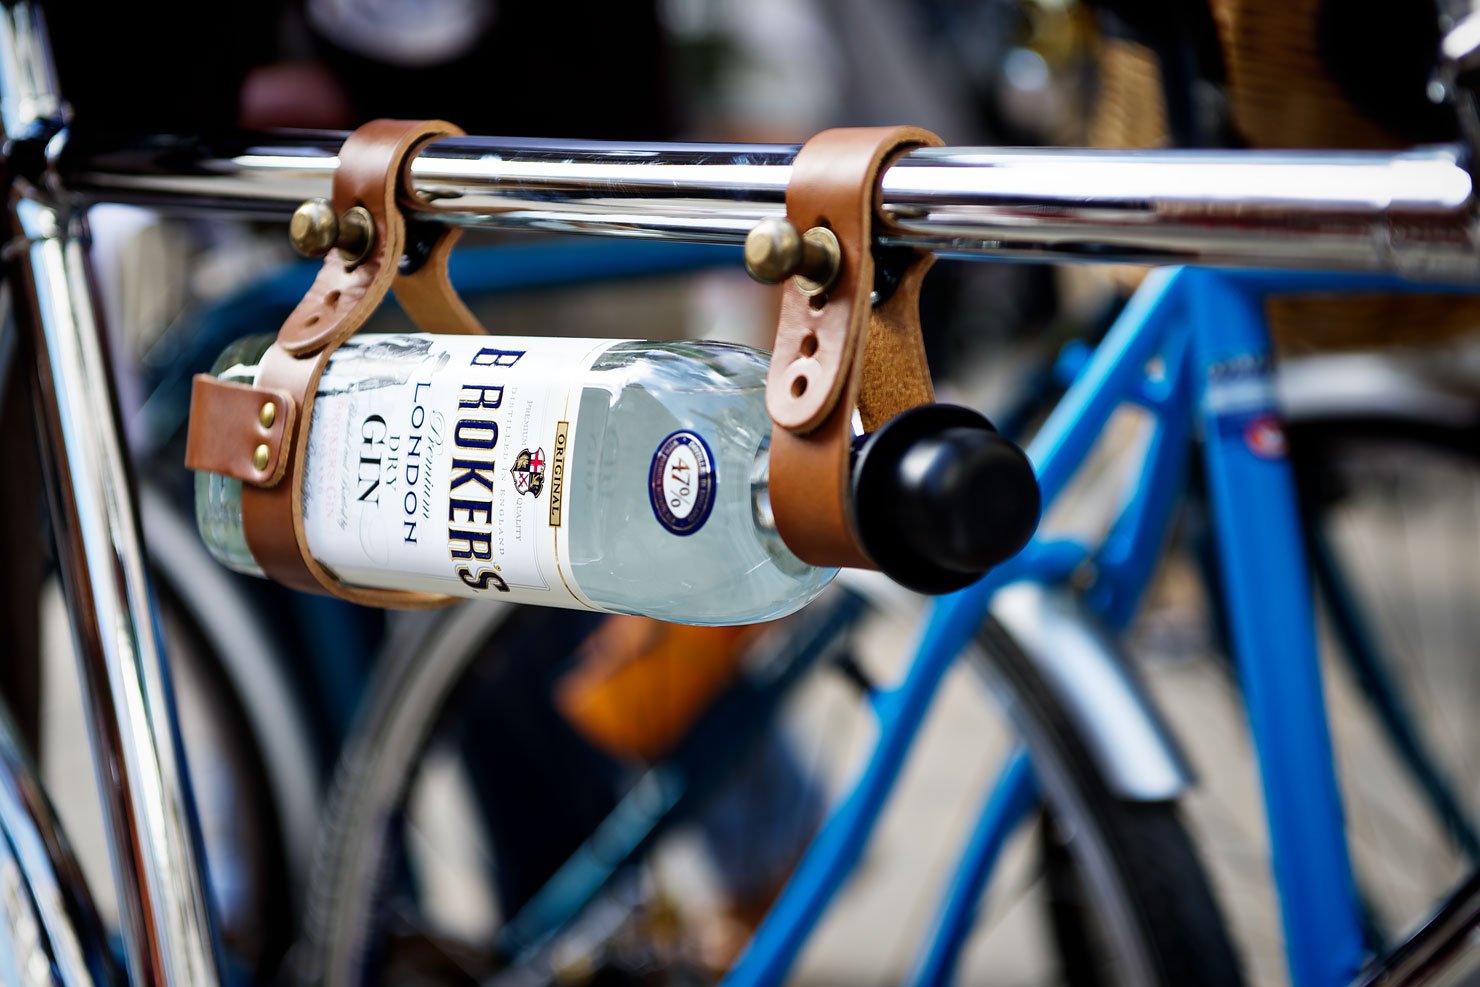 The Tweed Run London 2015 - Bottle of Gin on a bike